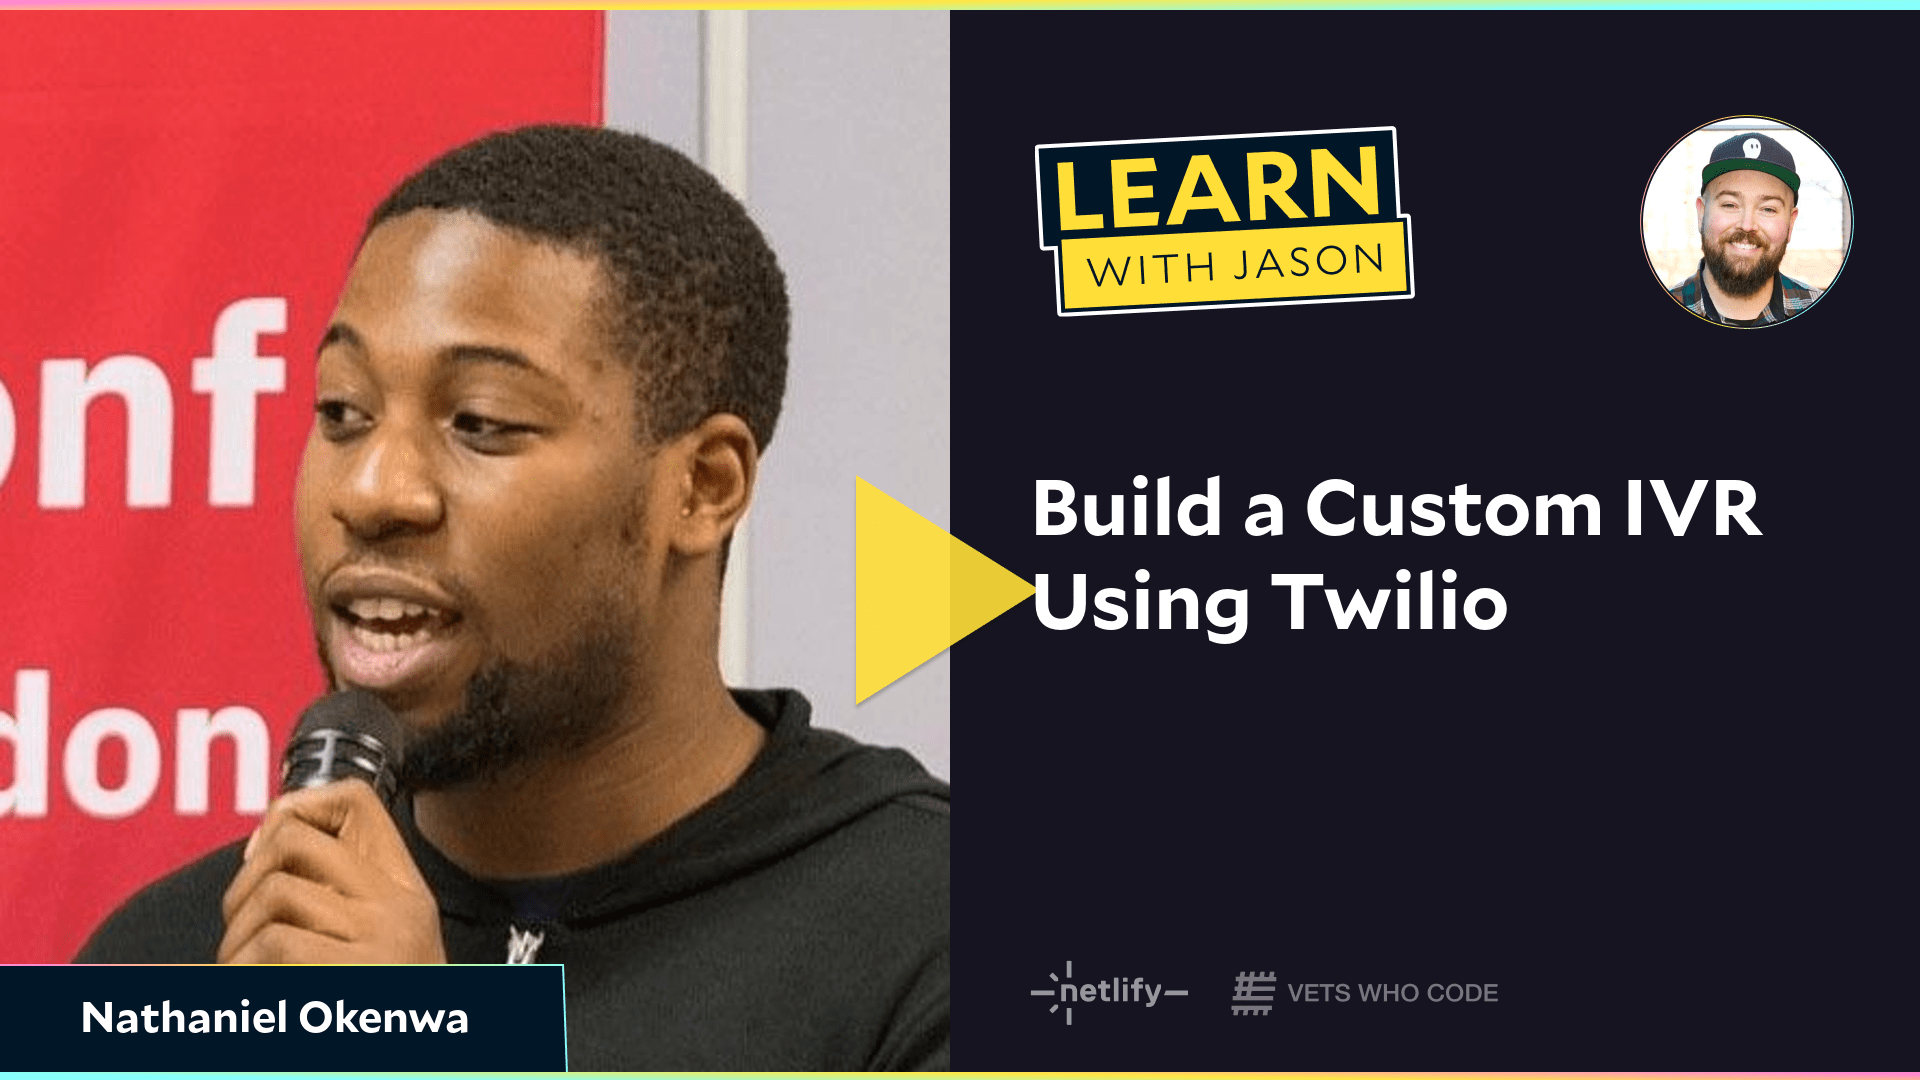 Build a Custom IVR Using Twilio (with Nathaniel Okenwa)